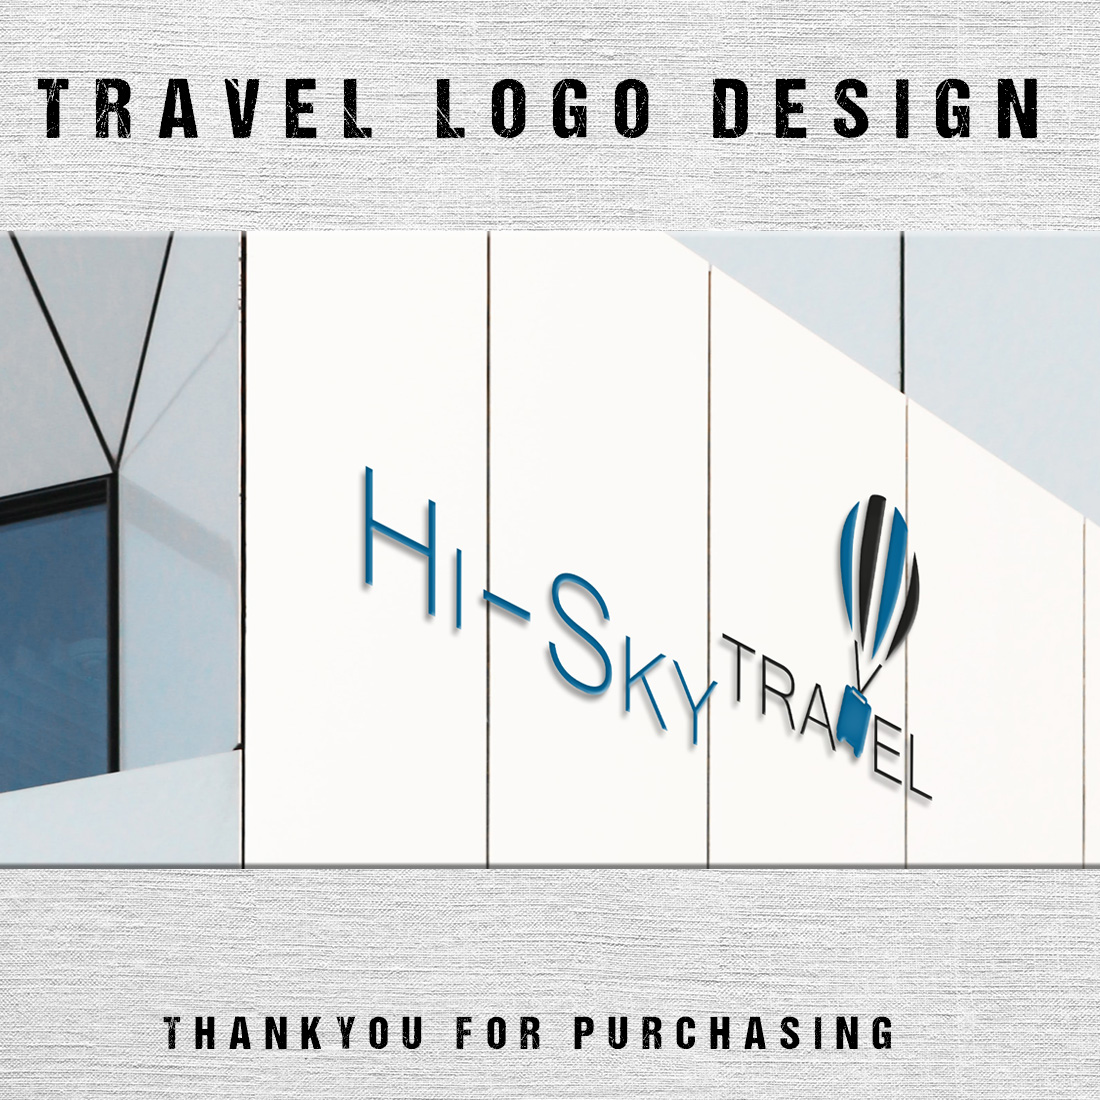 Travel Logo Design Template cover image.